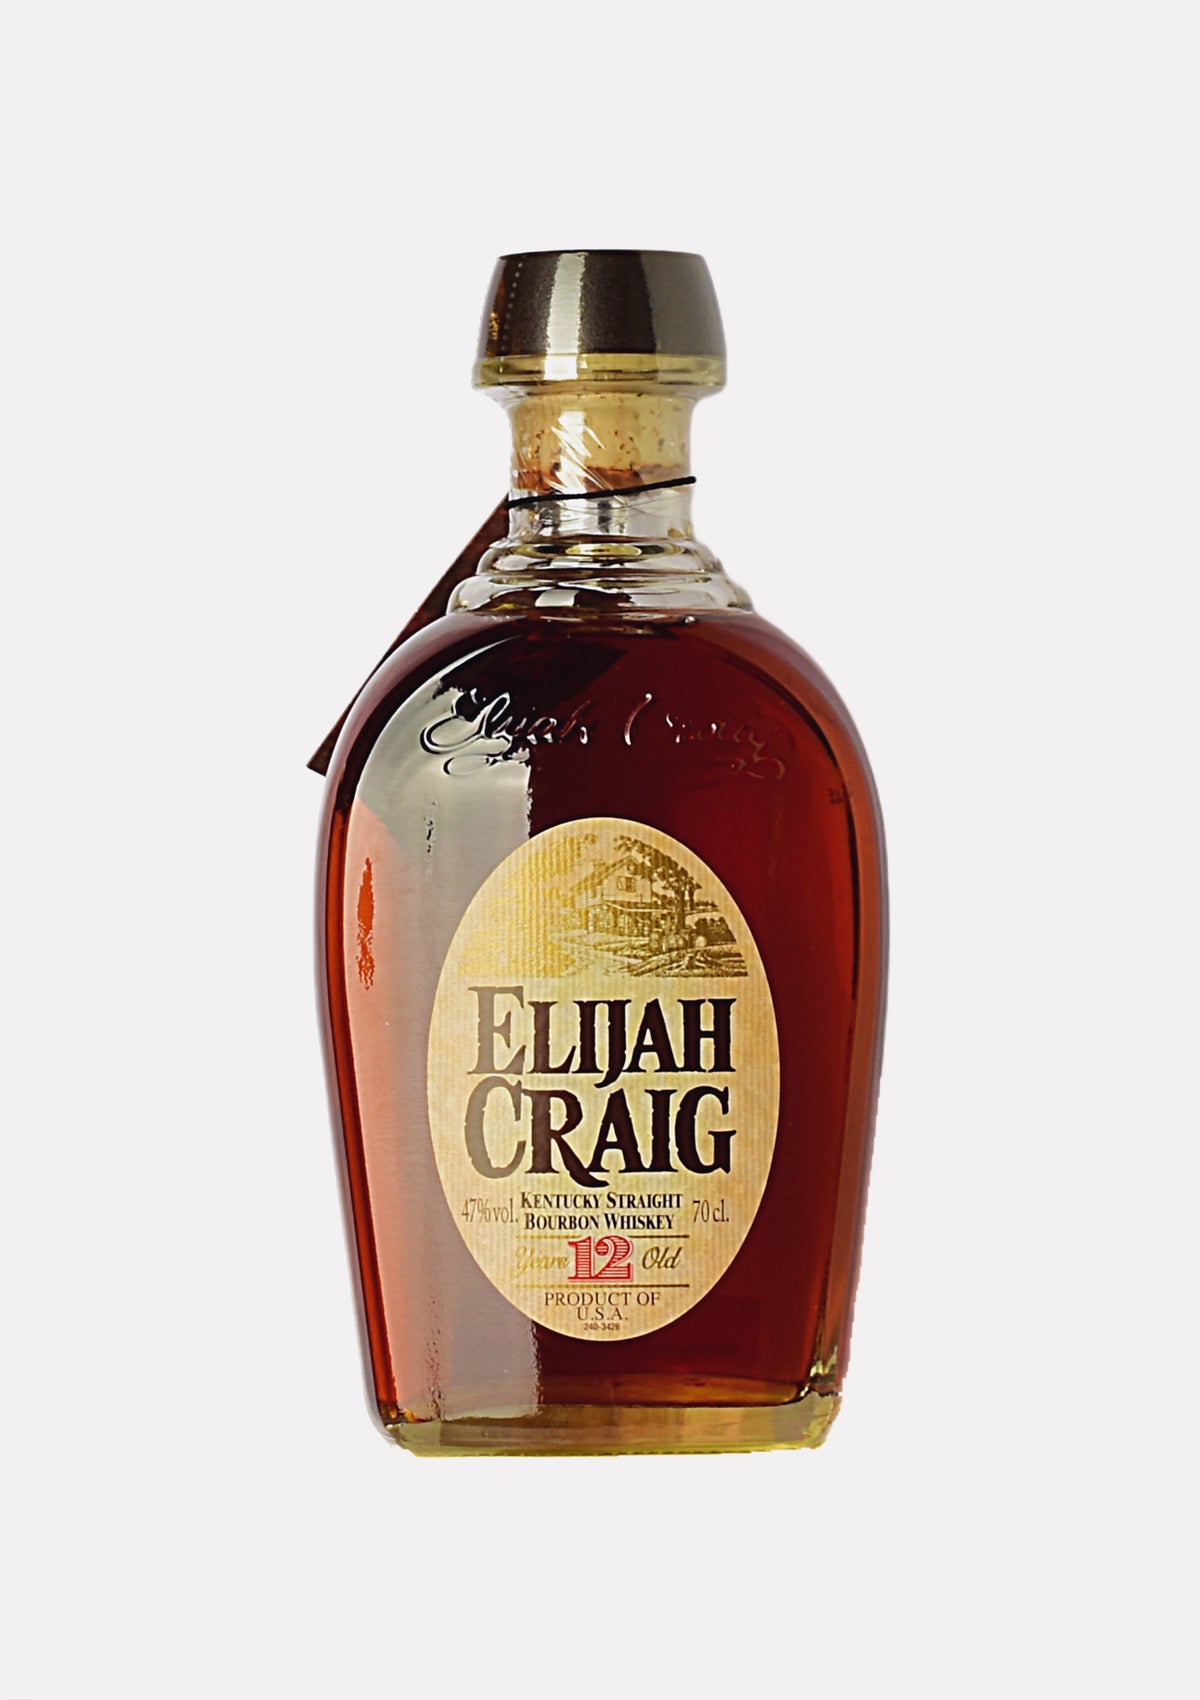 Elijah Craig Kentucky Straight Bourbon Whiskey 12 Jahre 94 Proof